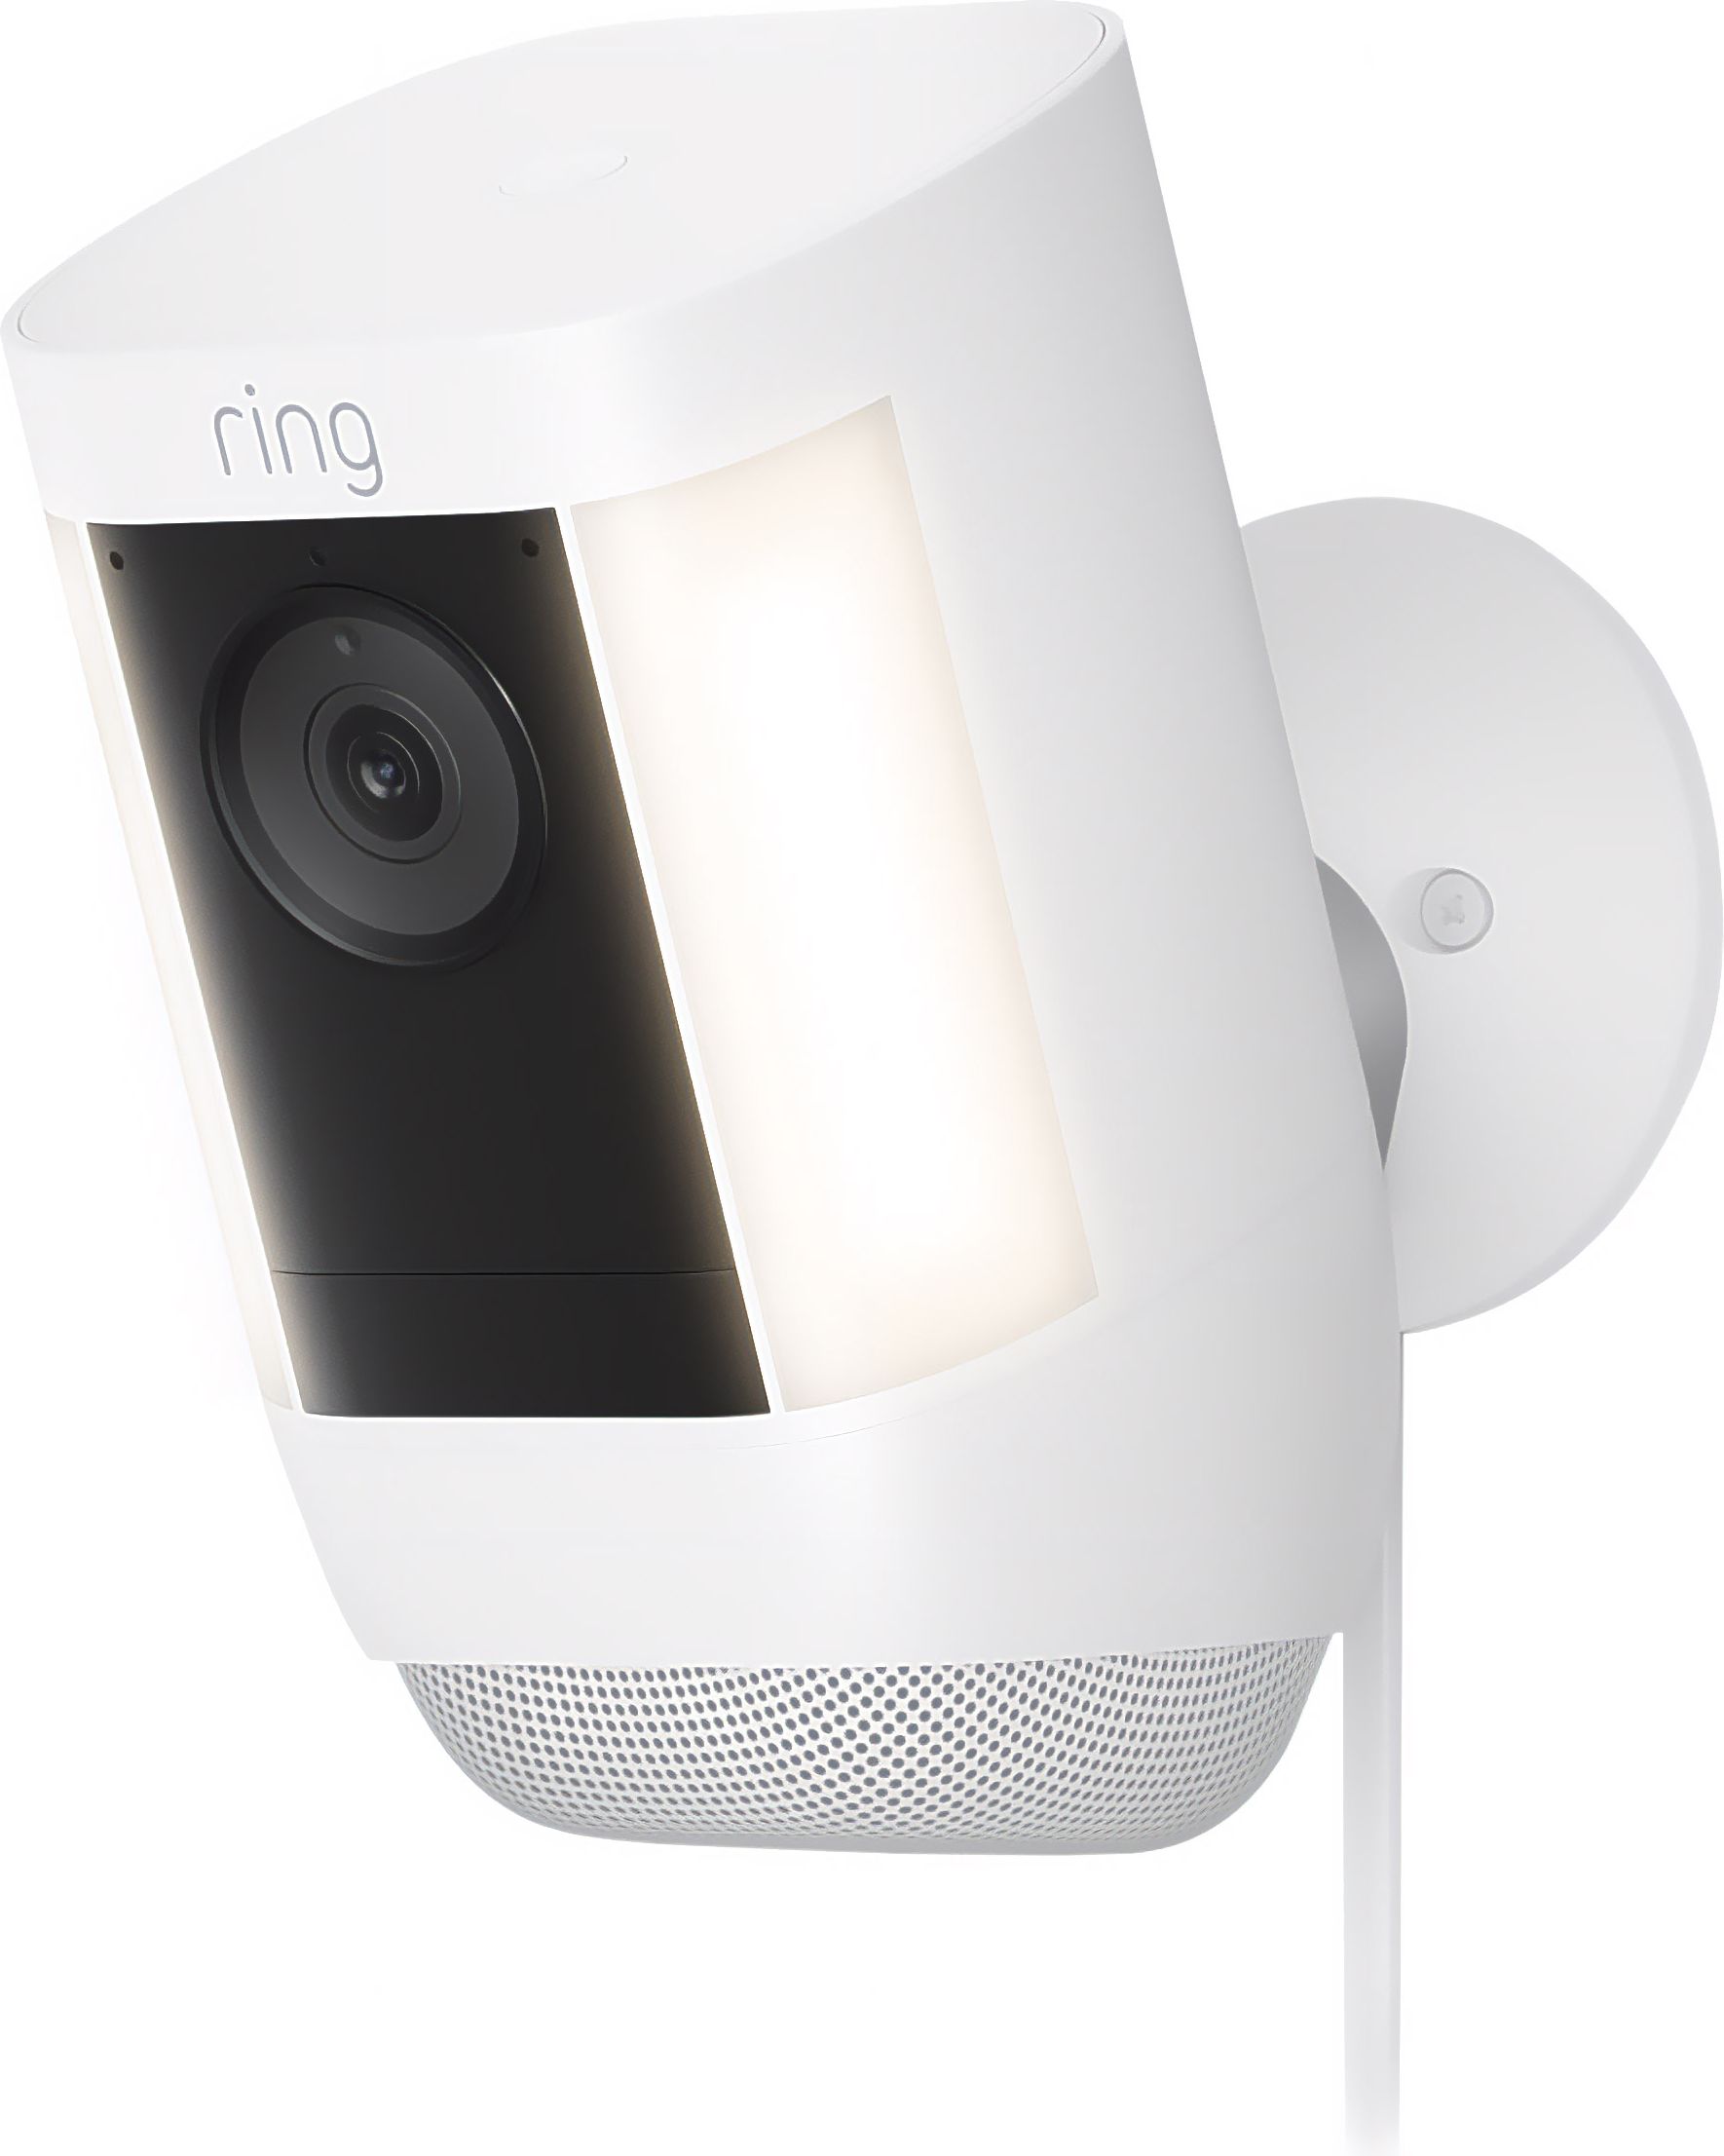 Ring Plug-In Spotlight Cam Pro Full HD 1080p Smart Home Security Camera - White, White